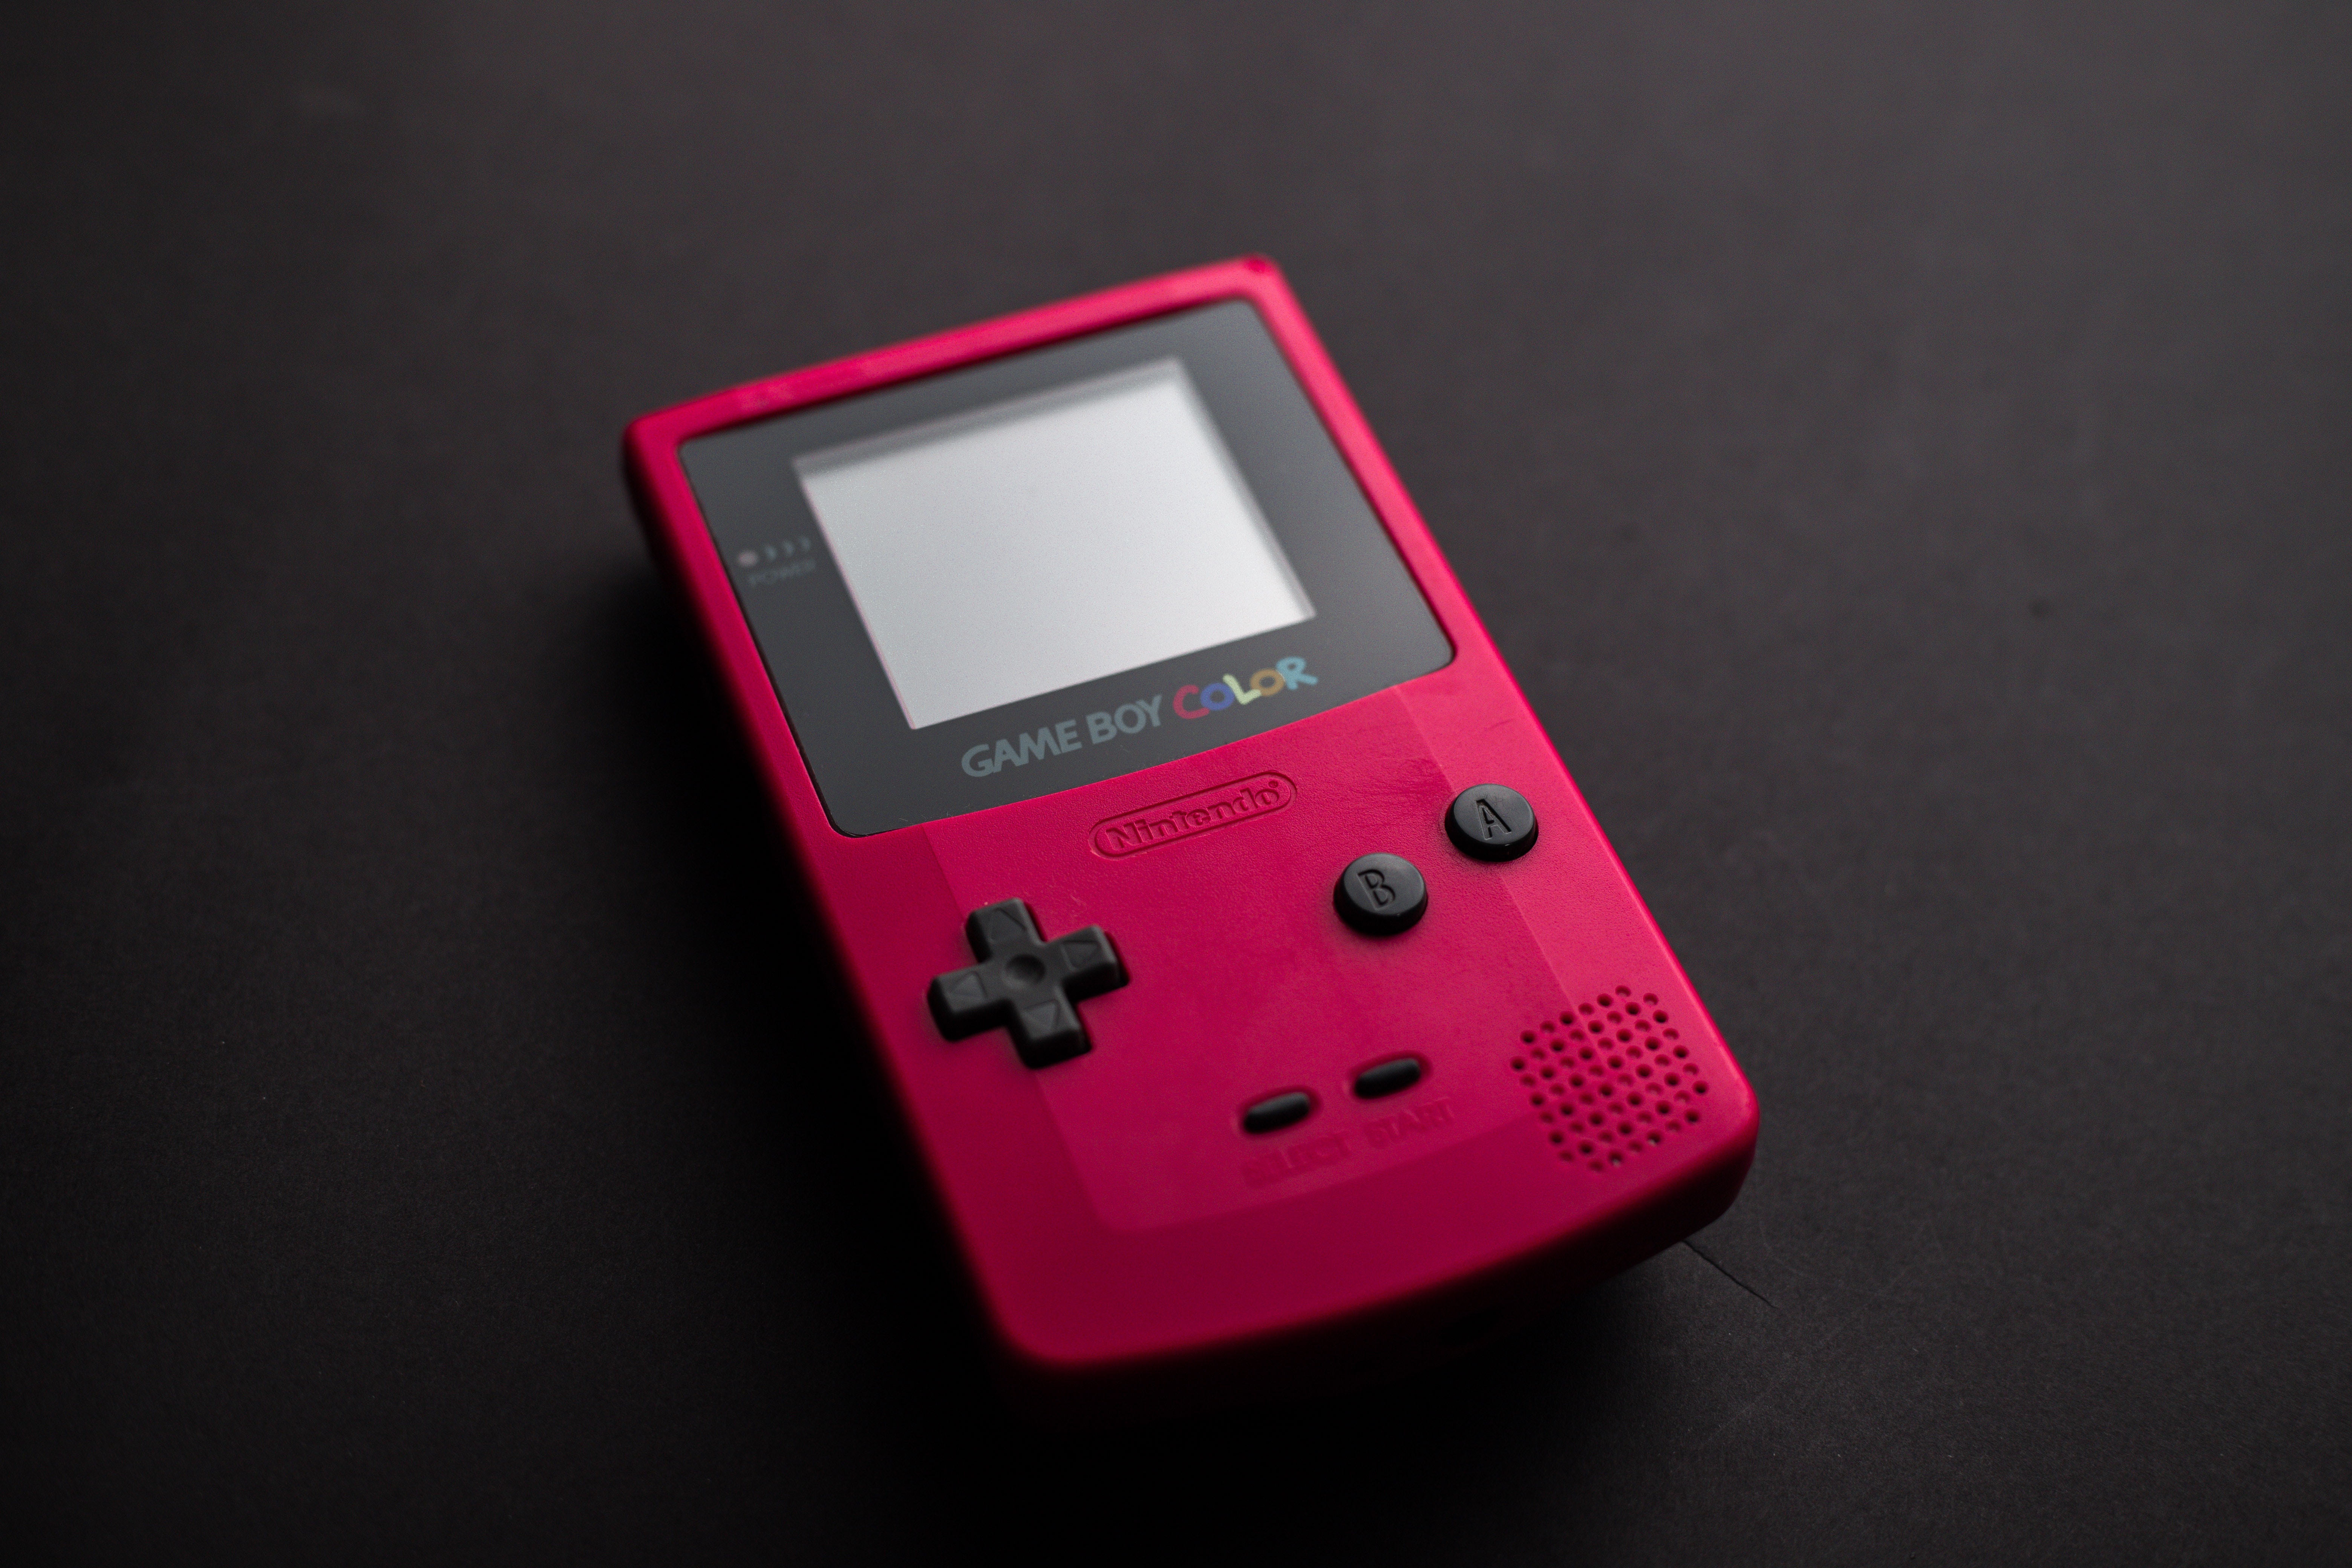 Game Boy was a popular handheld game console (Photo credit: Luis Quintero/Pexels)